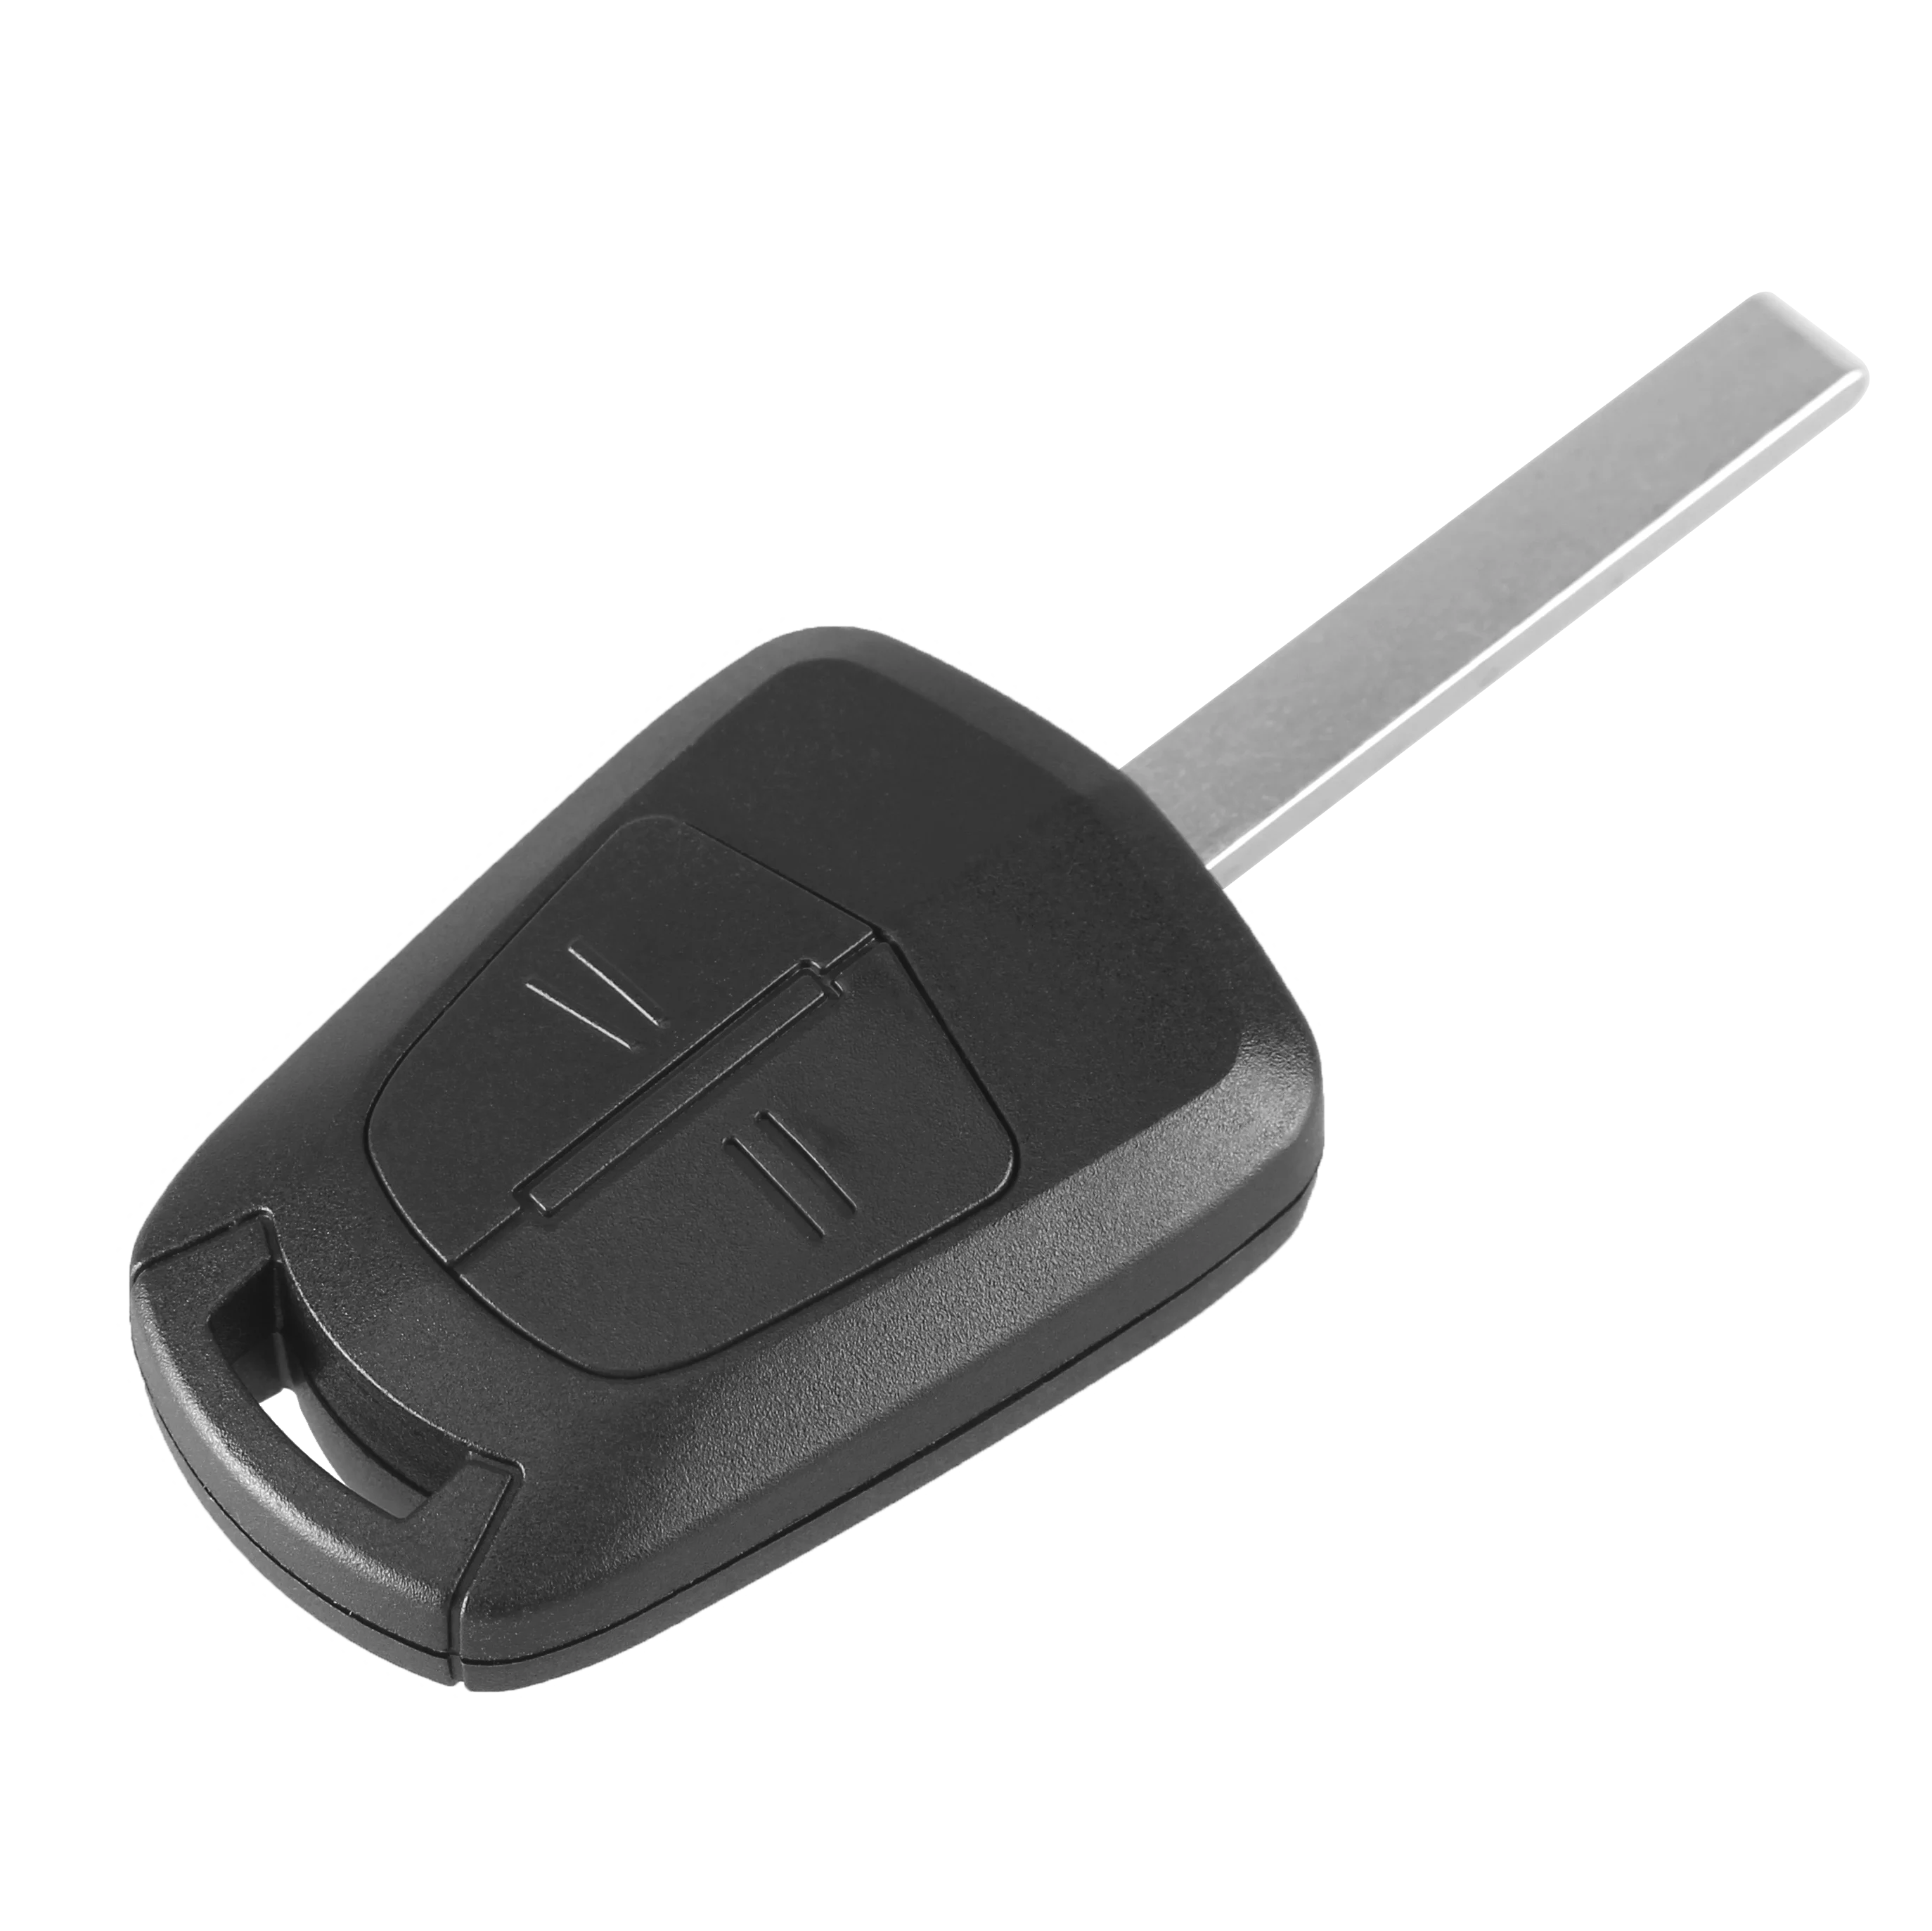 2 Button Remote Key FOB Shell Replace for Vauxhall Opel Corsa Agila Meriva